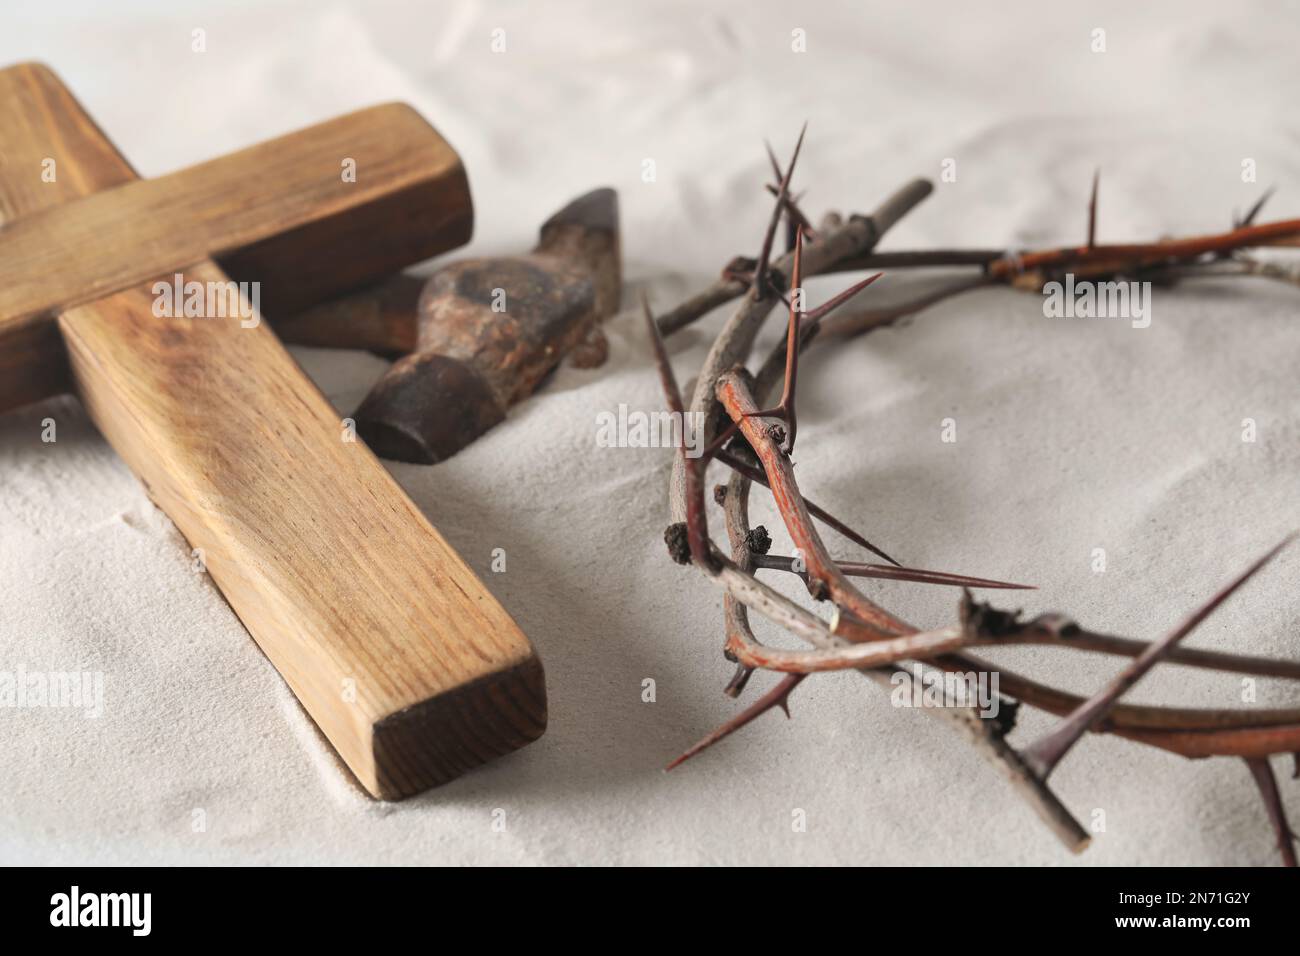 Corona de espinas, cruz de madera y martillo sobre arena. Atributos de Pascua Foto de stock